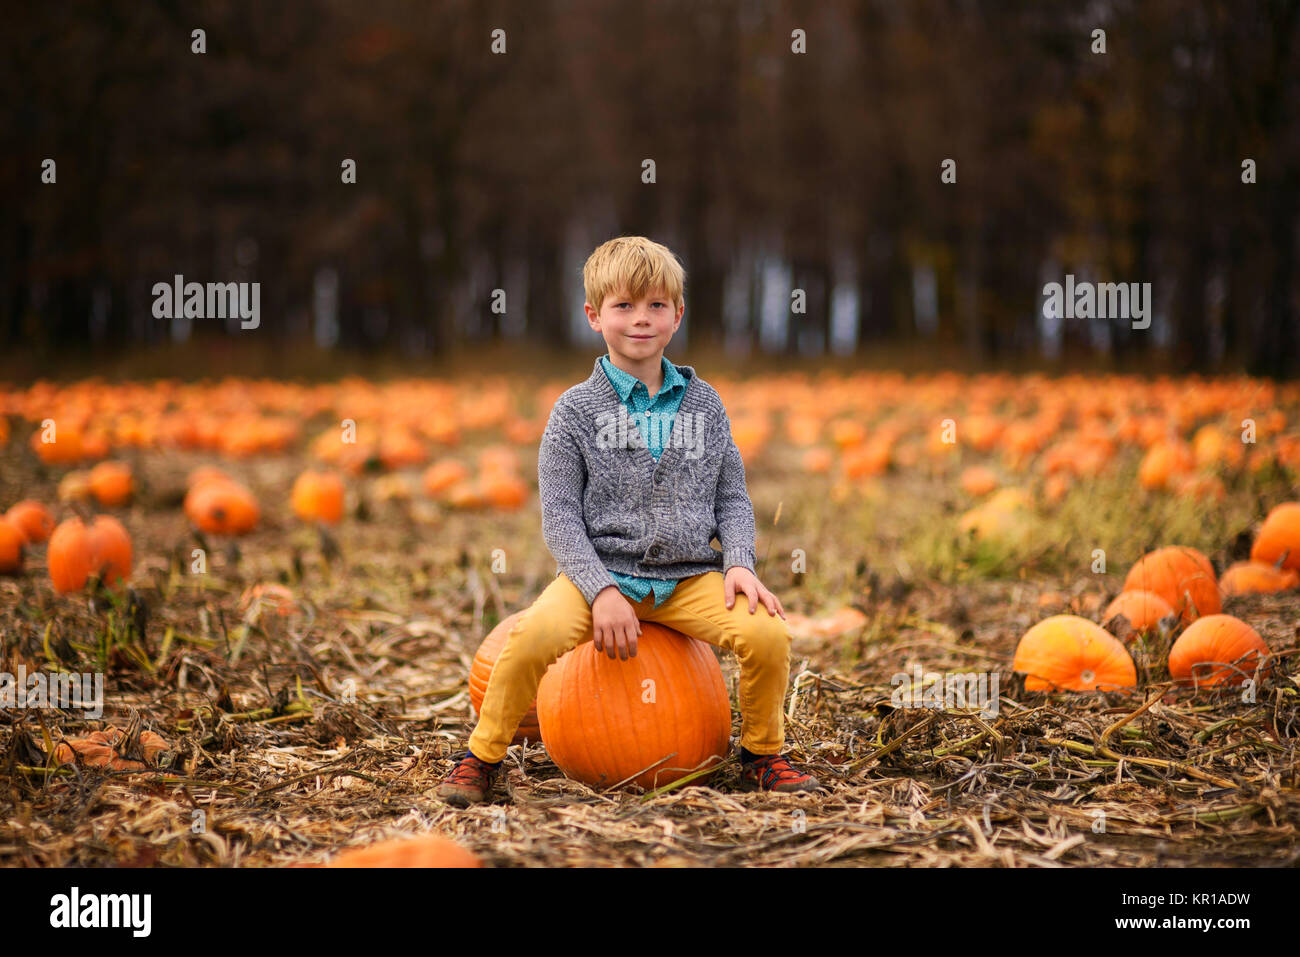 Boy sitting on a pumpkin in a pumpkin patch Stock Photo